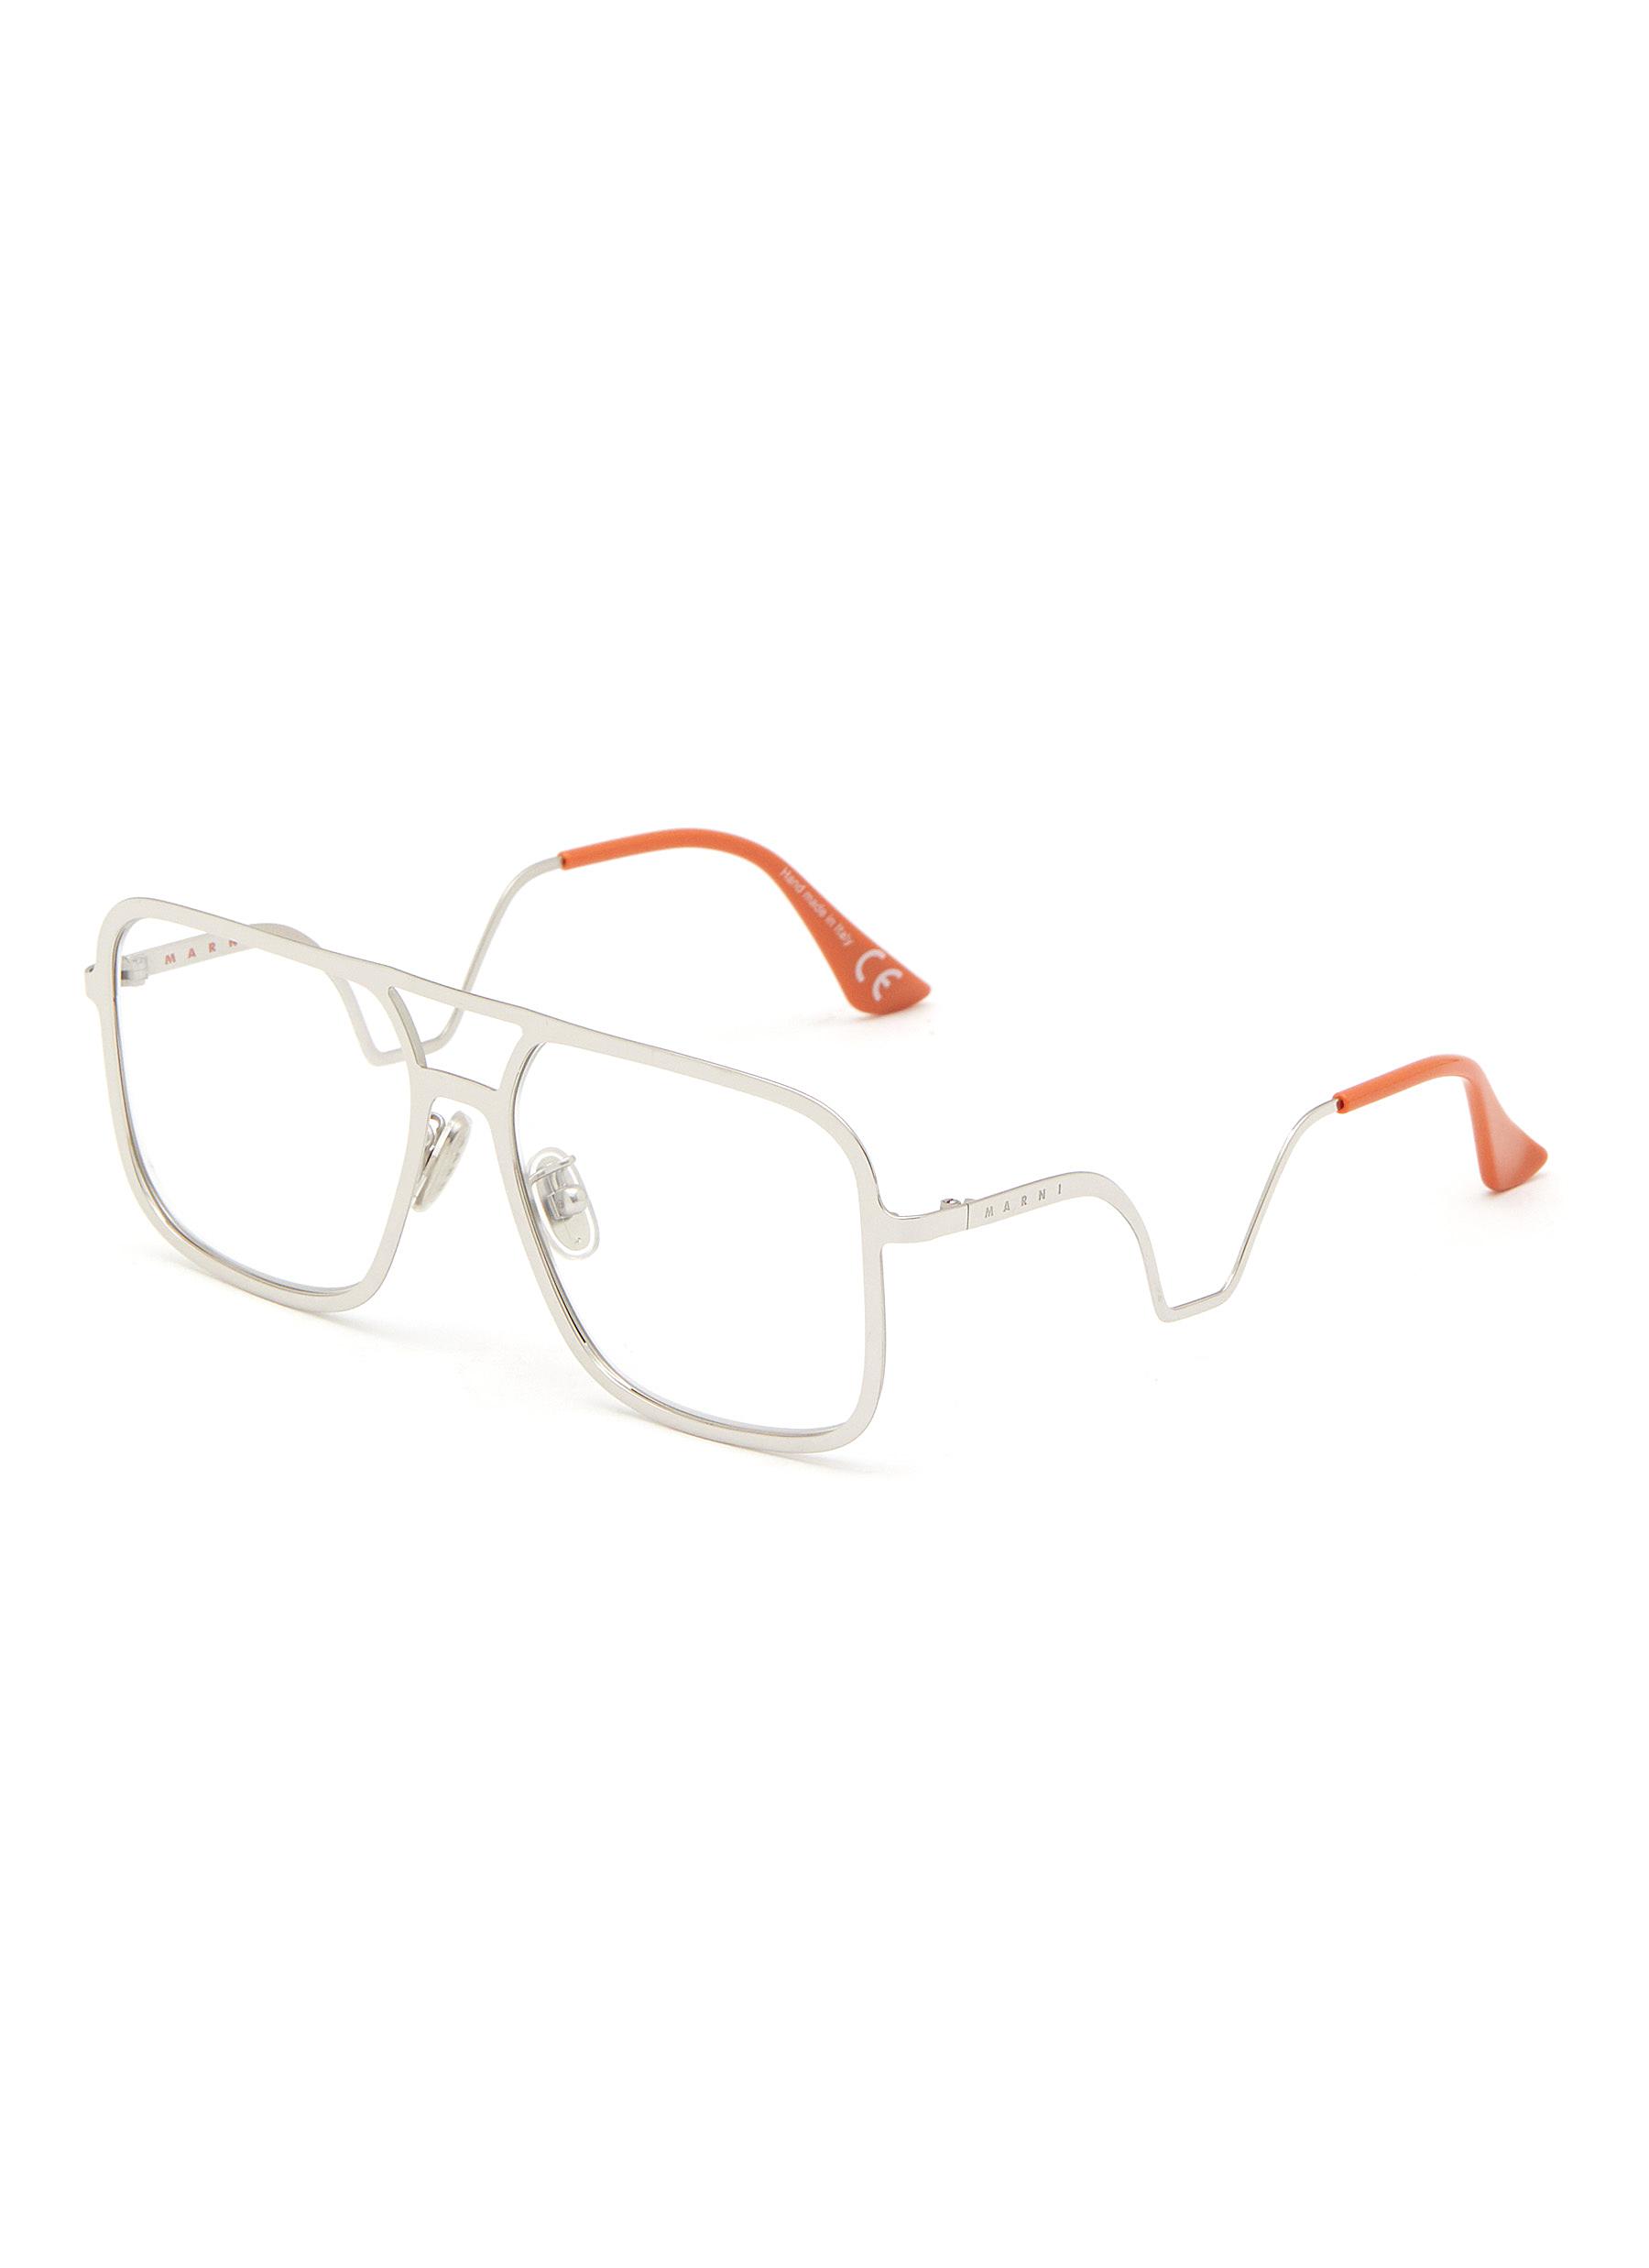 Ha Long Bay Metal Sqaure Optical Glasses